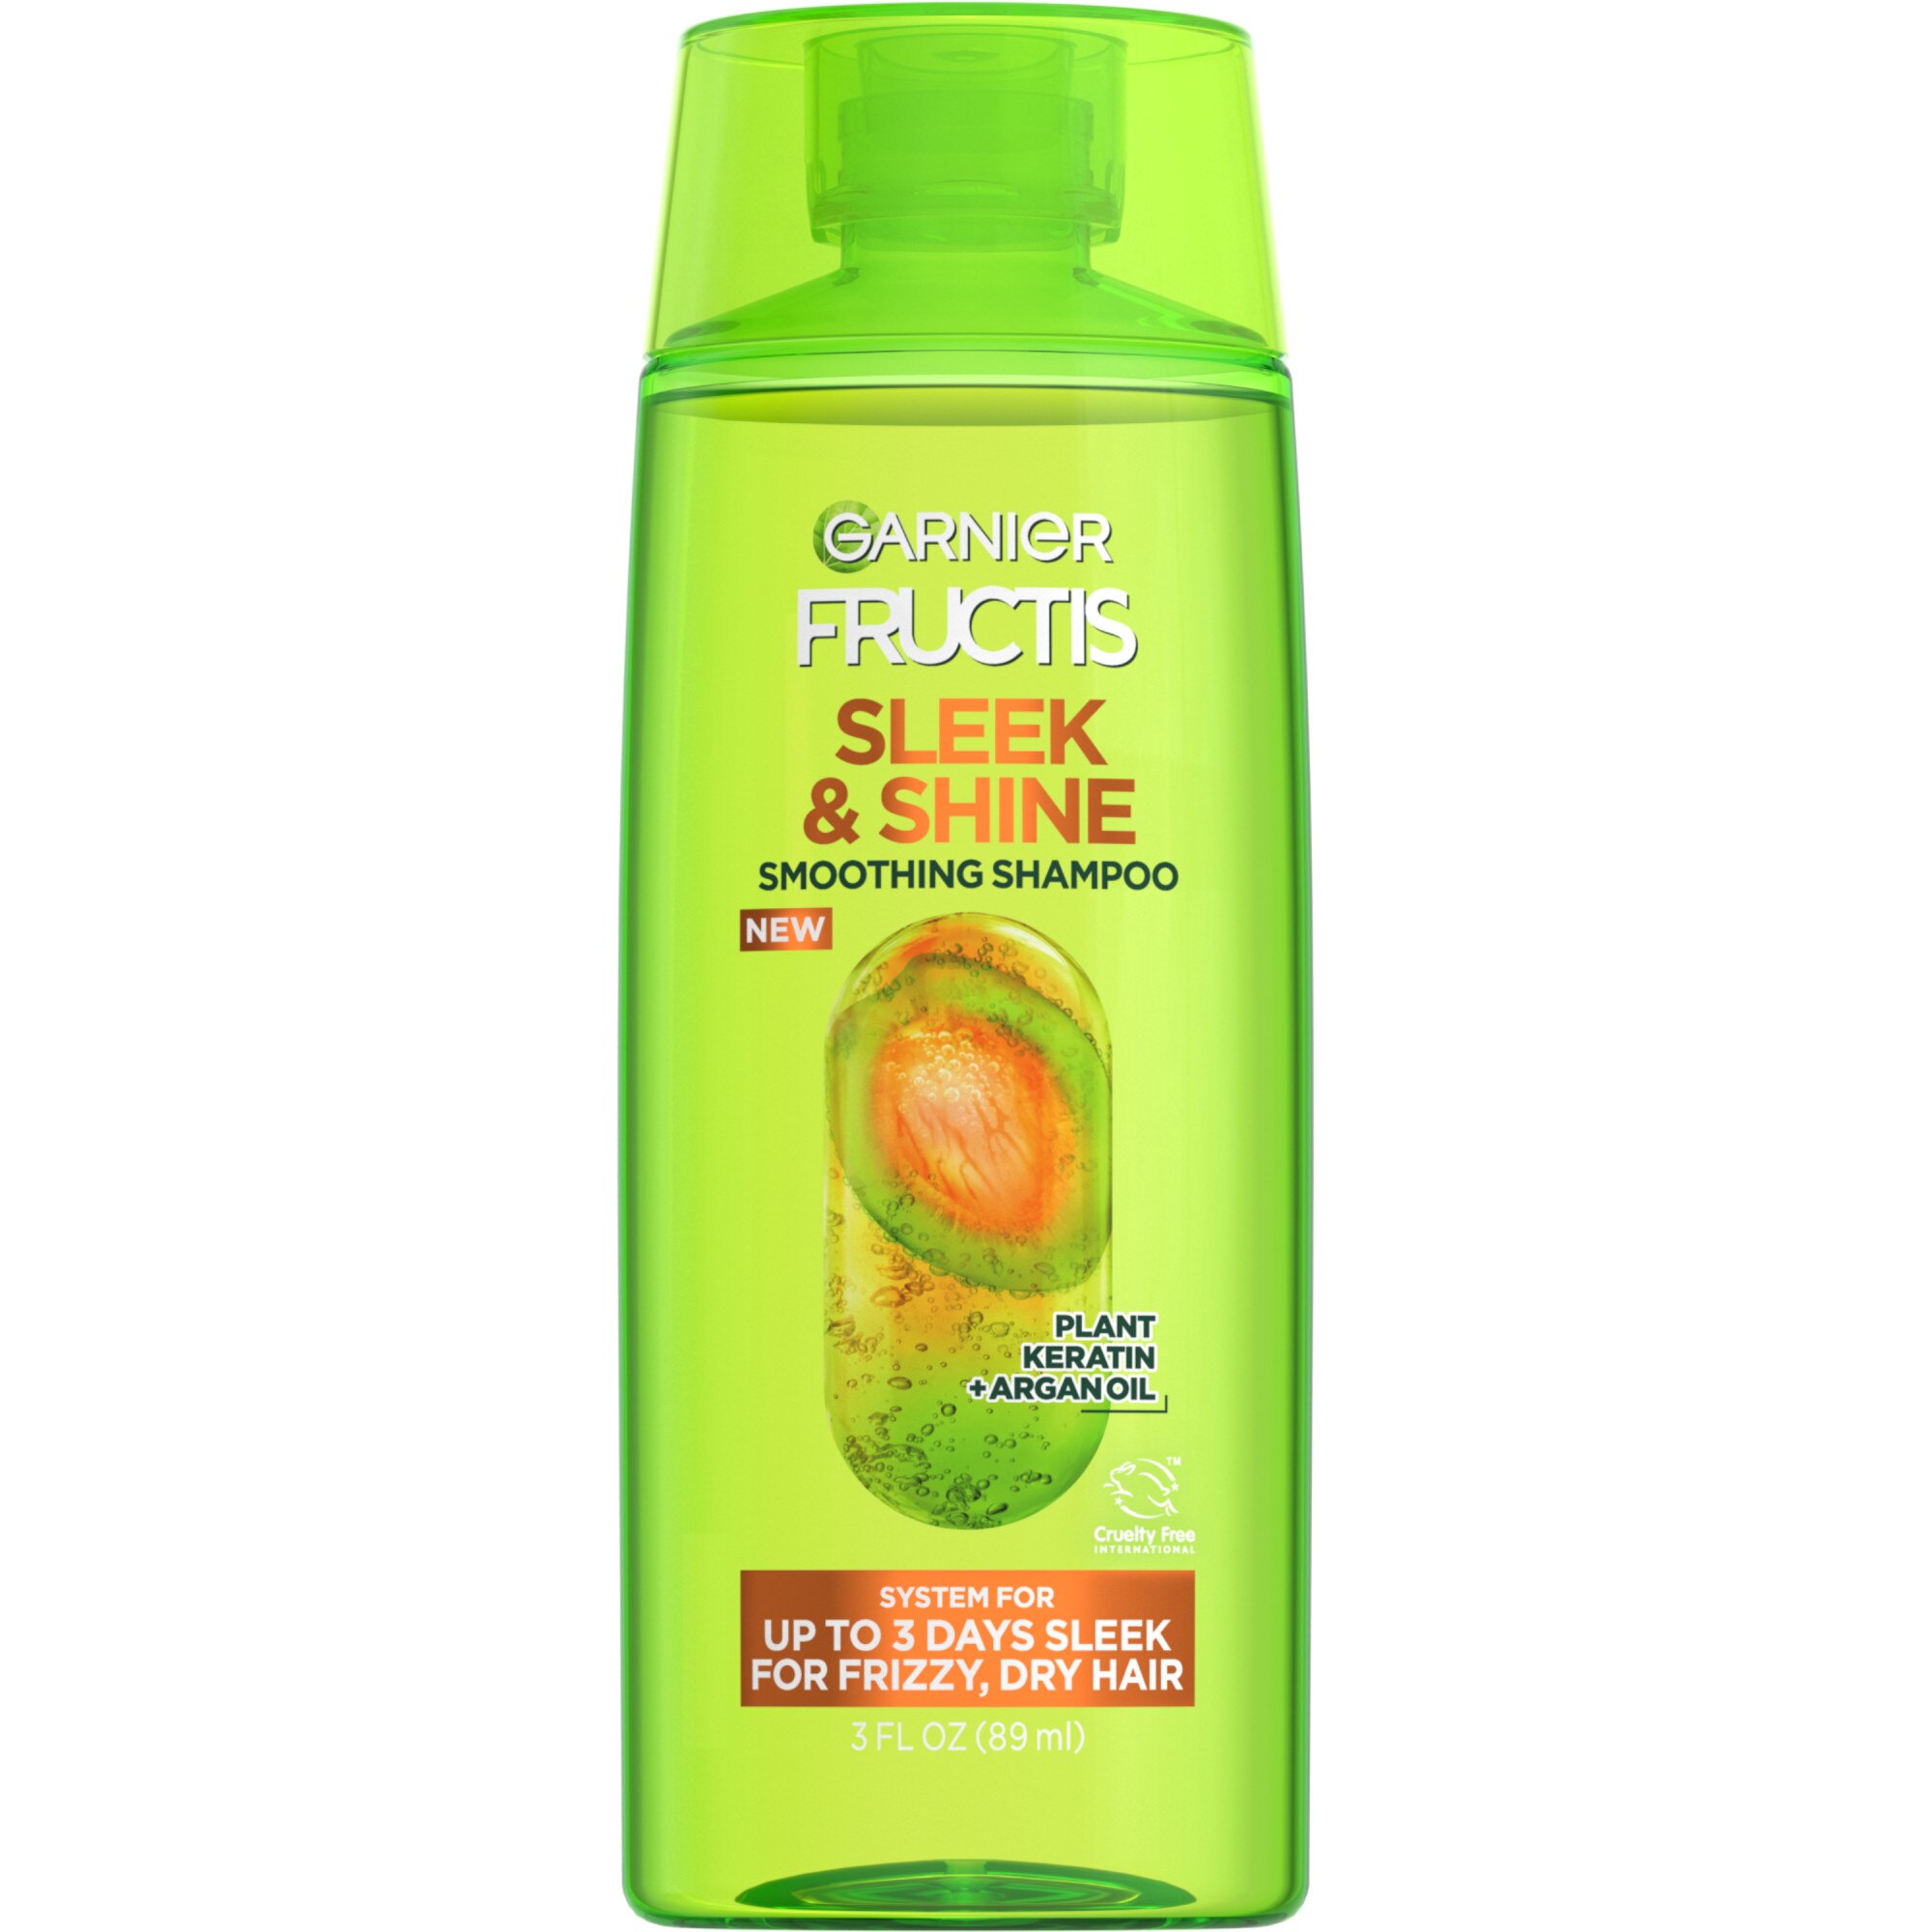 Garnier Fructis Sleek OZ Trial Shine 3 Shampoo, Size 